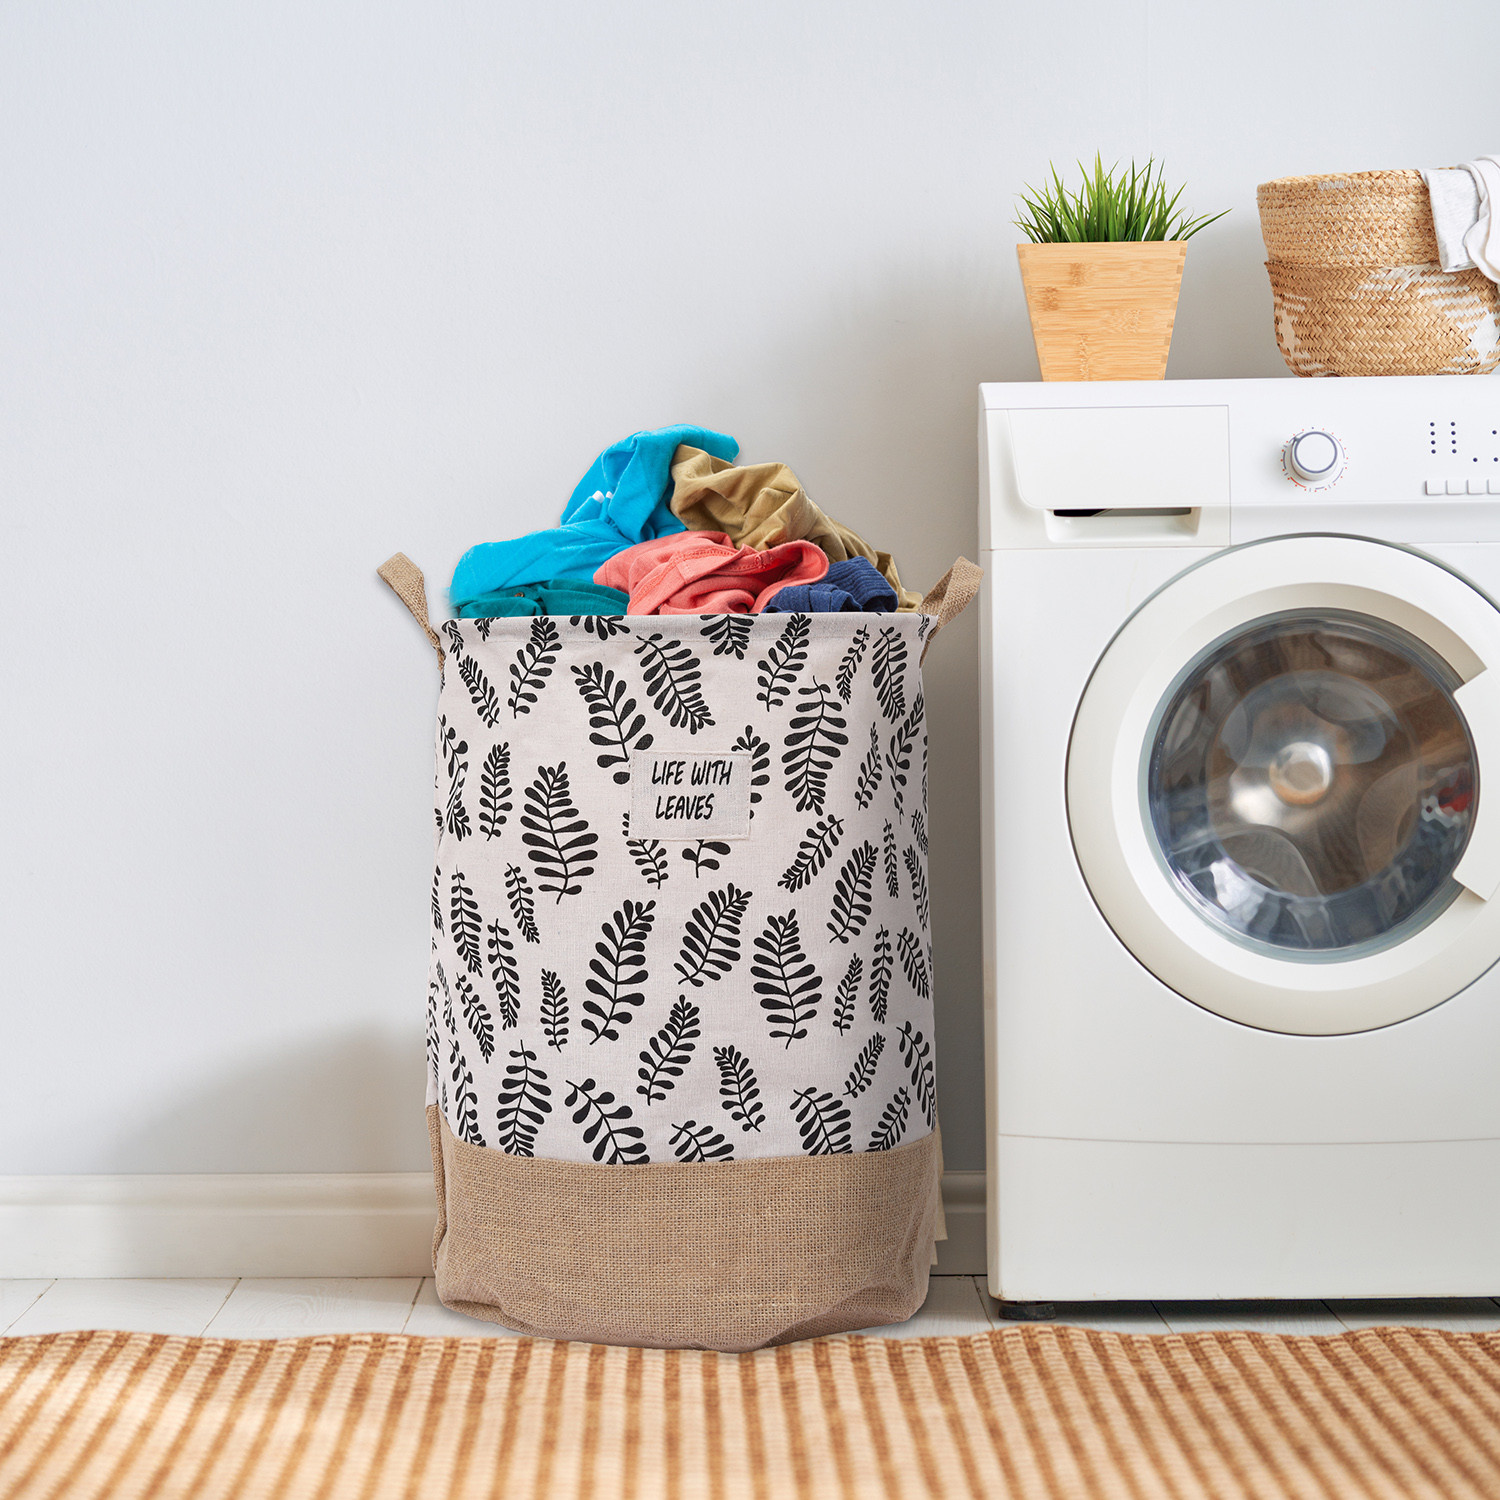 Kuber Industries Laundry Basket | Round Foldable Laundry Basket | Flower Gol Jute Storage Bag | Clothes Basket for Home | Toy Storage Basket | 45 LTR | Brown